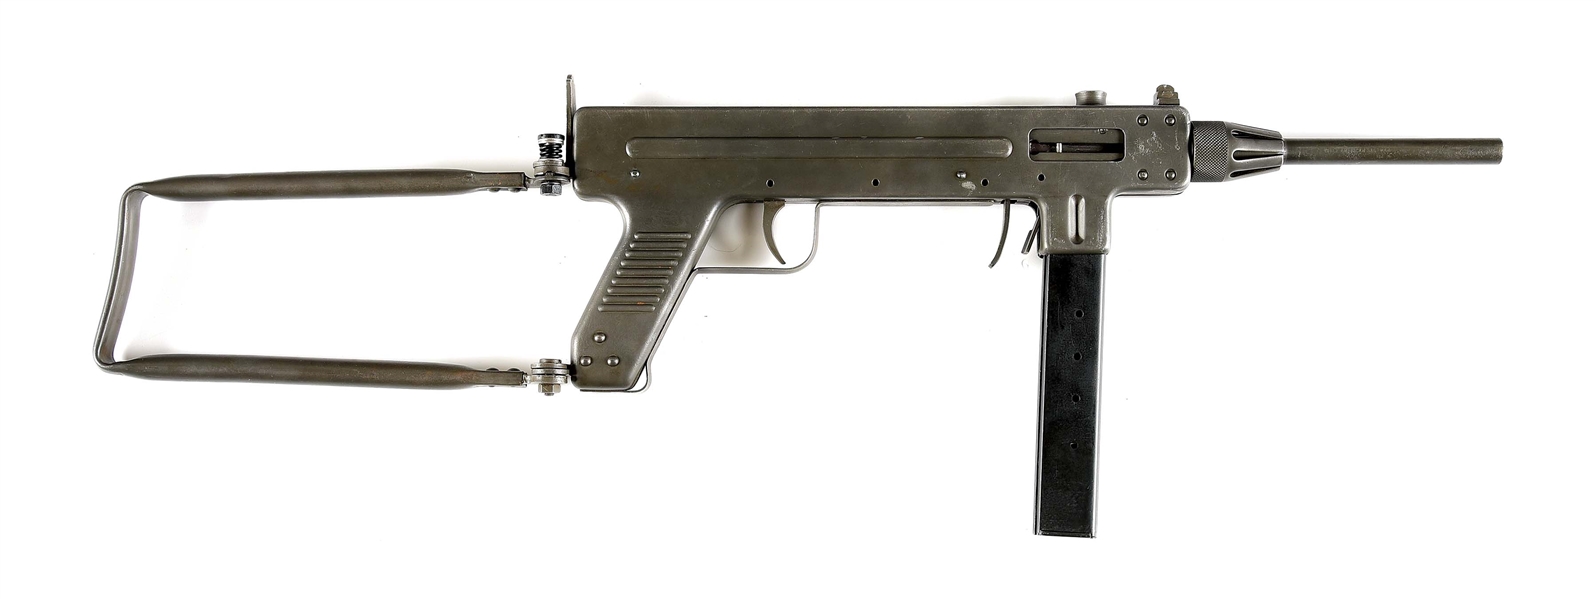 (N) DANISH MADSEN MODEL 50 VENEZUELAN CONTRACT SUBMACHINE GUN (PRE-86 DEALER SAMPLE).